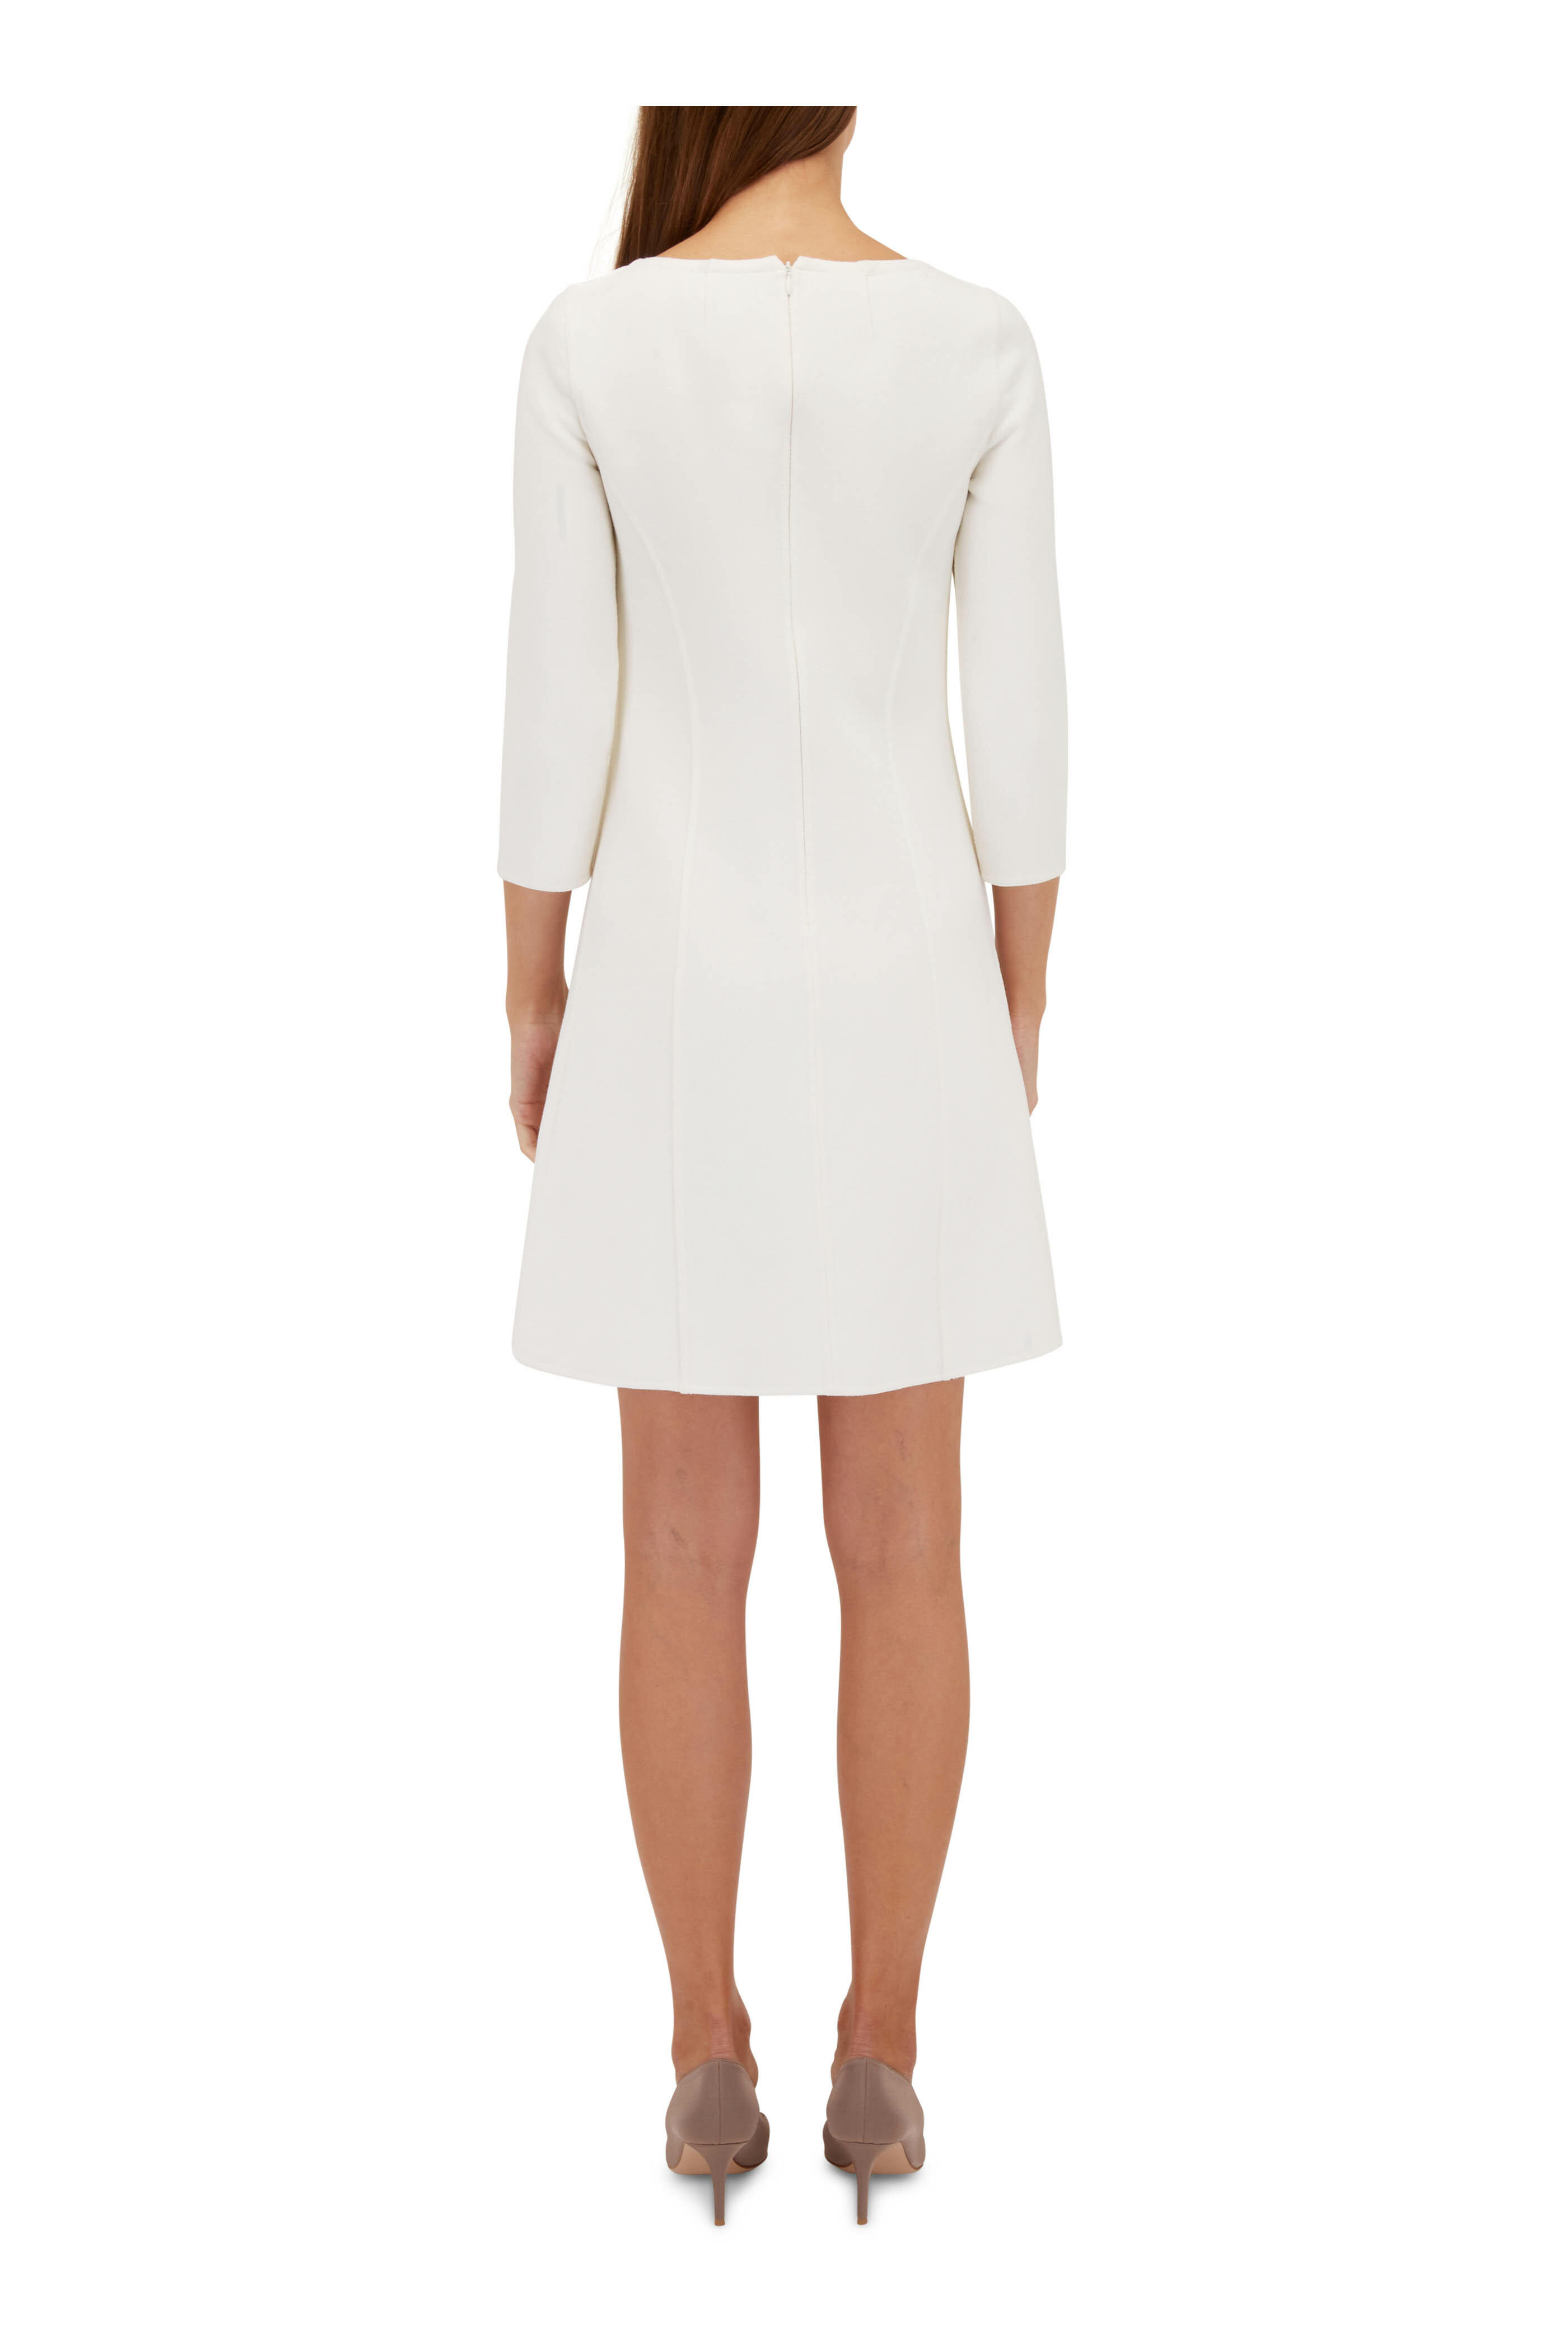 White Dress Shift Collection Three-Quarter Sleeve - Michael Kors Wool